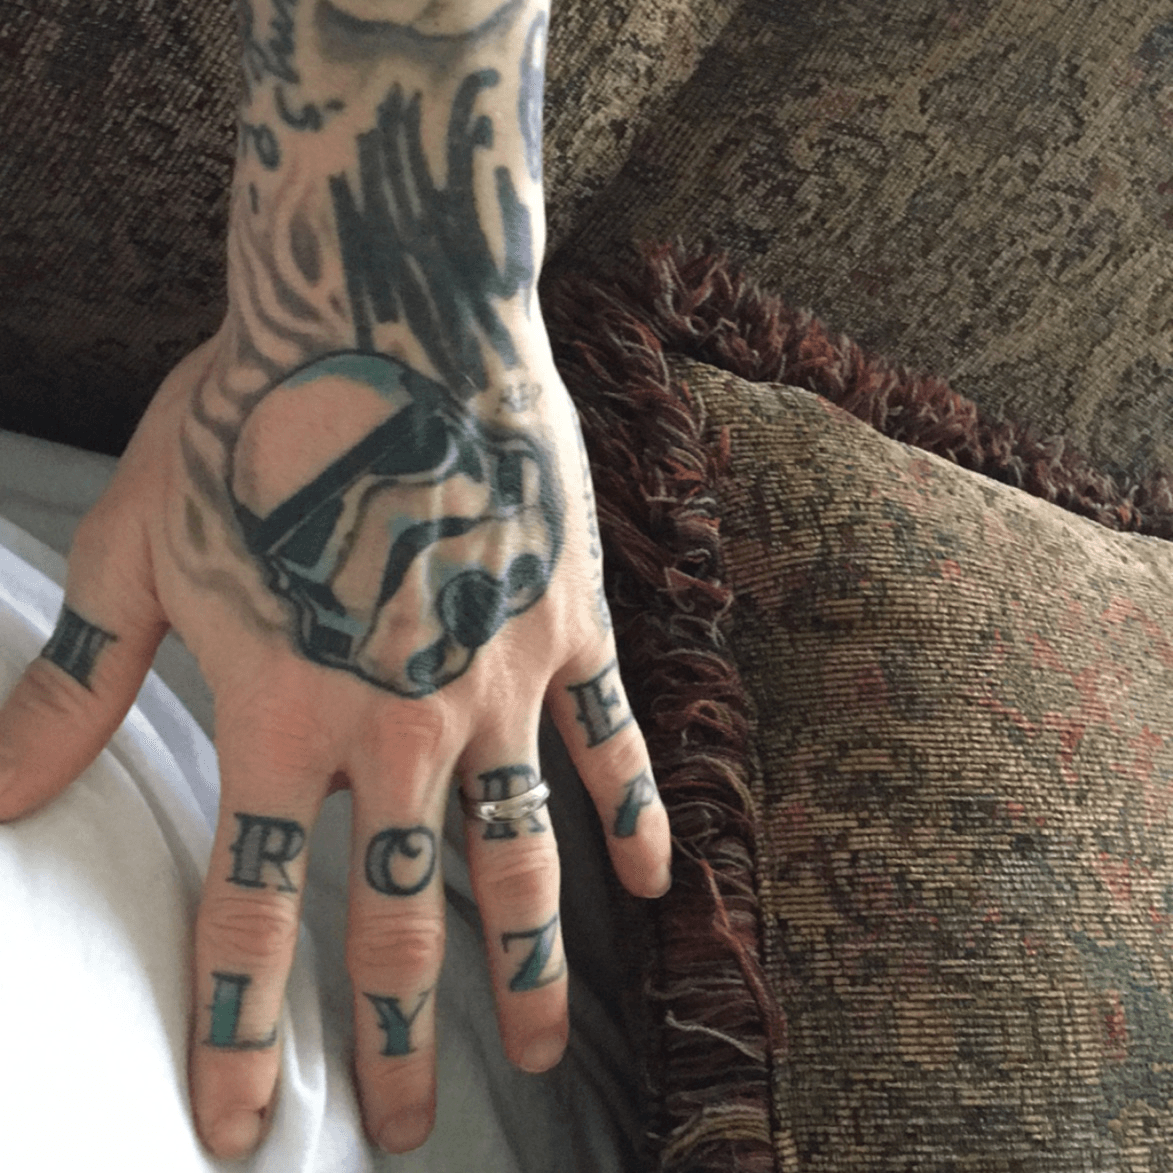 Mitch Lucker tattoos by KiraArts99 on DeviantArt